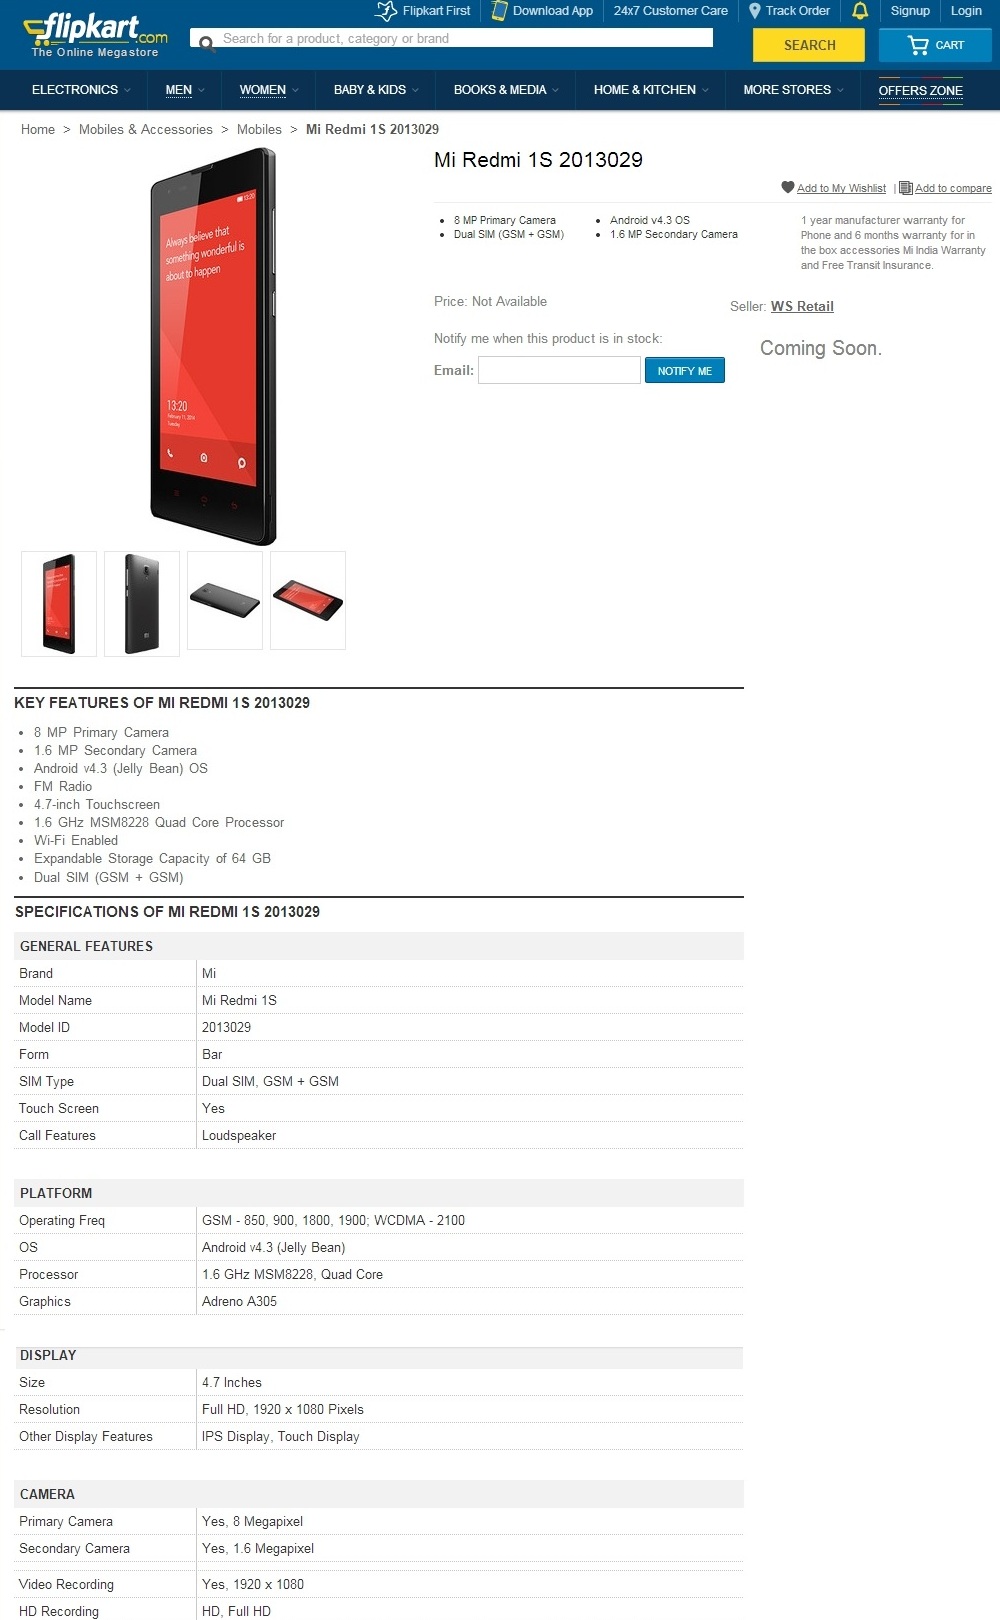 Flipkart mengklaim Xiaomi Mi Redmi 1S memiliki layar full HD 3